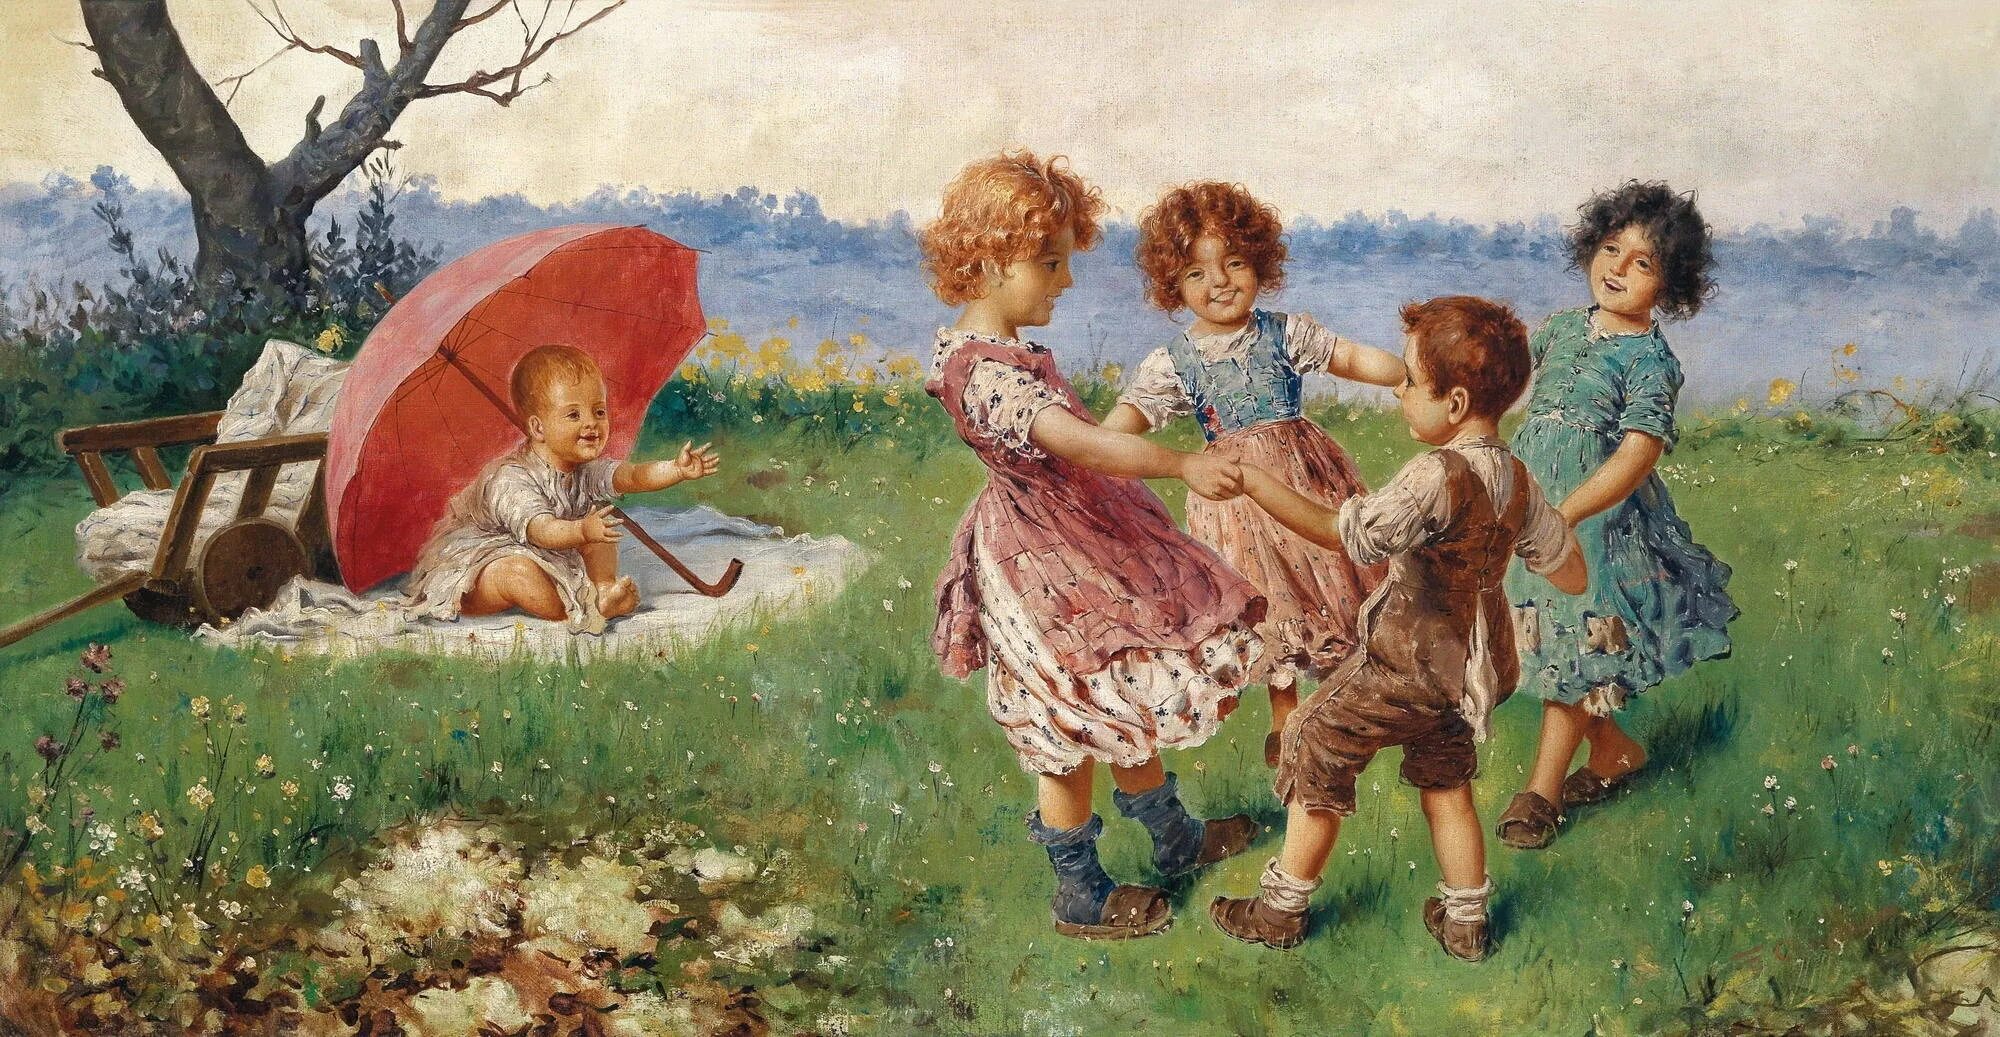 Б детвора. Играющие дети Федерико олива (Federico Oliva) (19 век). Фредерико олива картины. Фриц Цубер-Бюлер картины. Фредерик Морган качели.